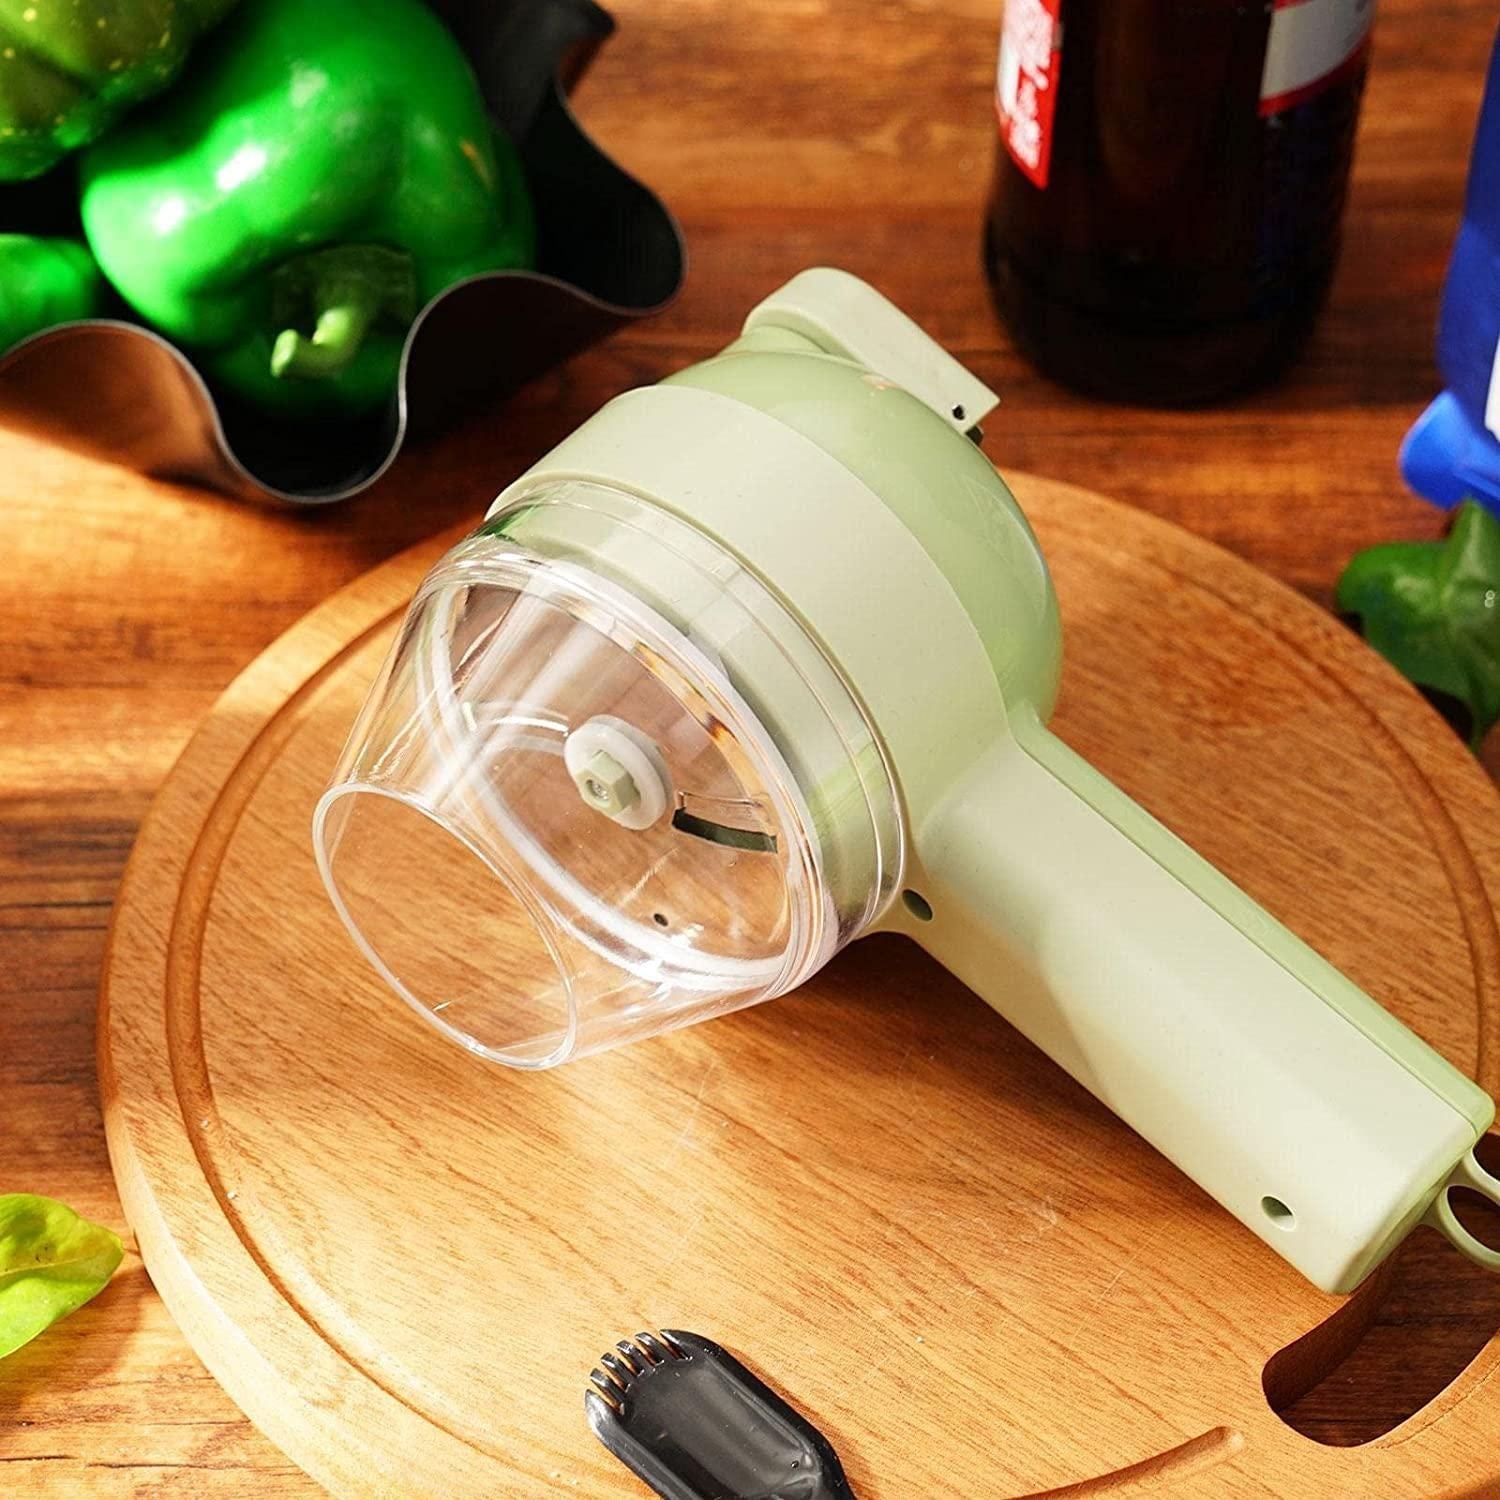 4 in 1 Mini Handheld Electric Vegetable Cutter Set Wireless Food Chopper  Grinder